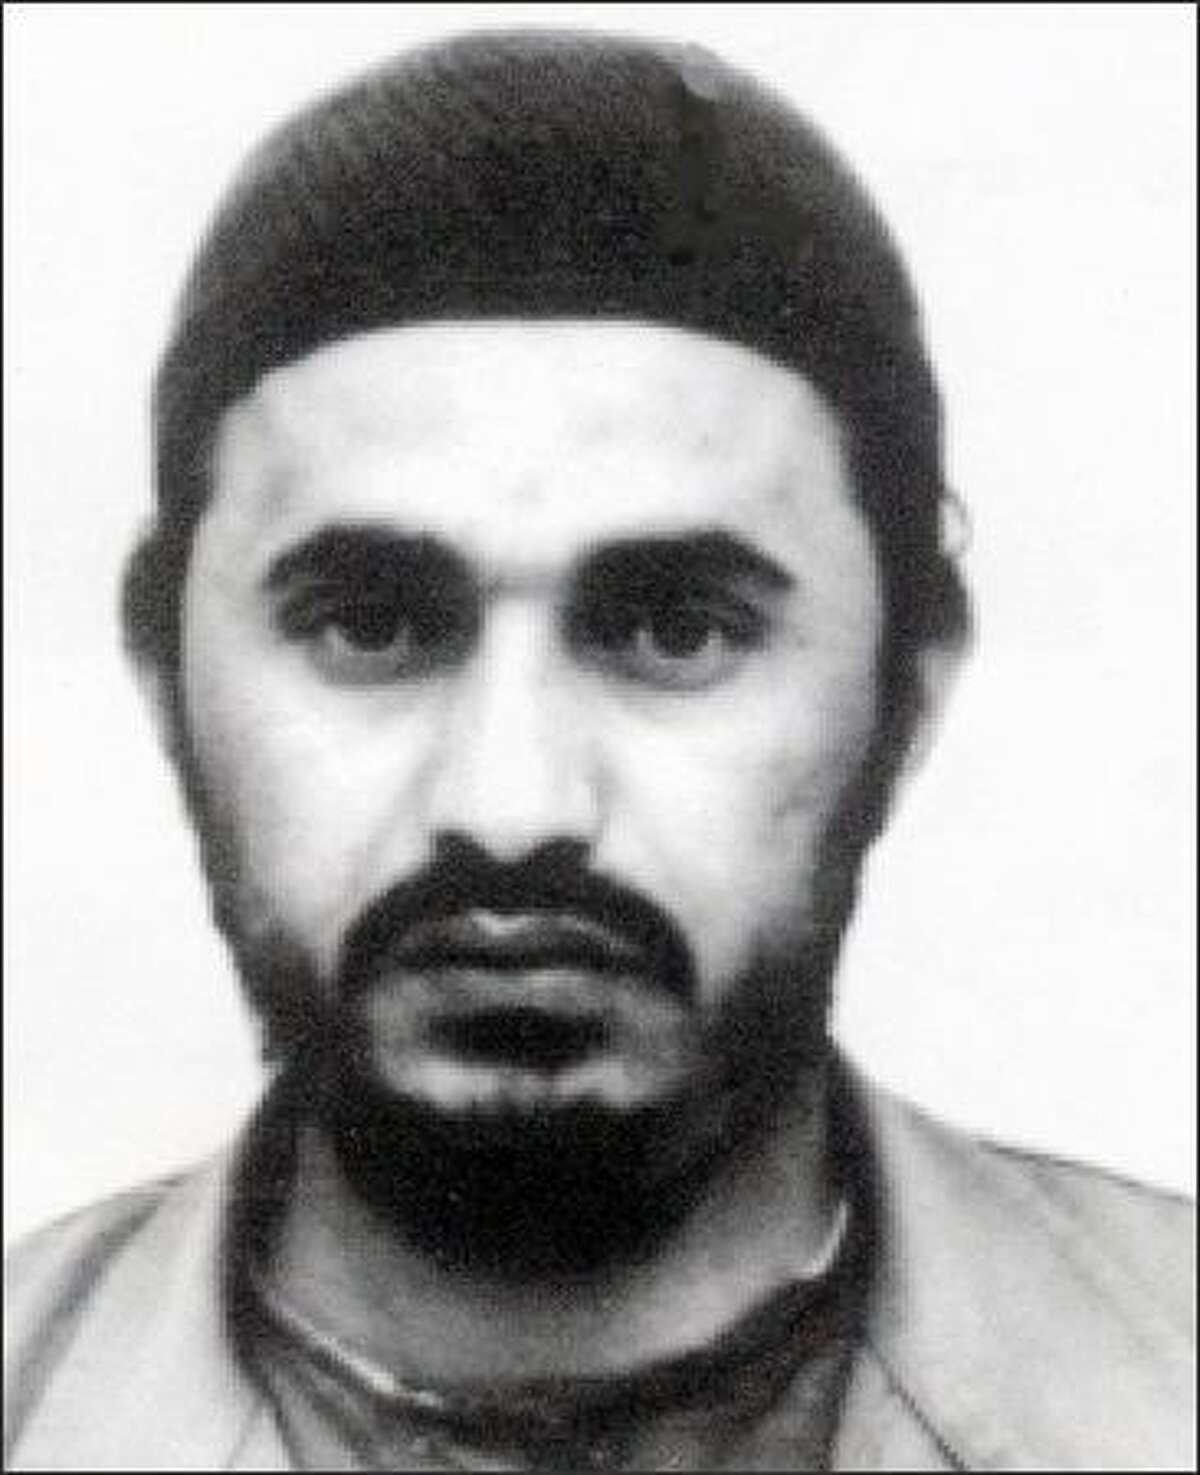 Abu Musab Al-Zarqawi, Jordanian terror mastermind.